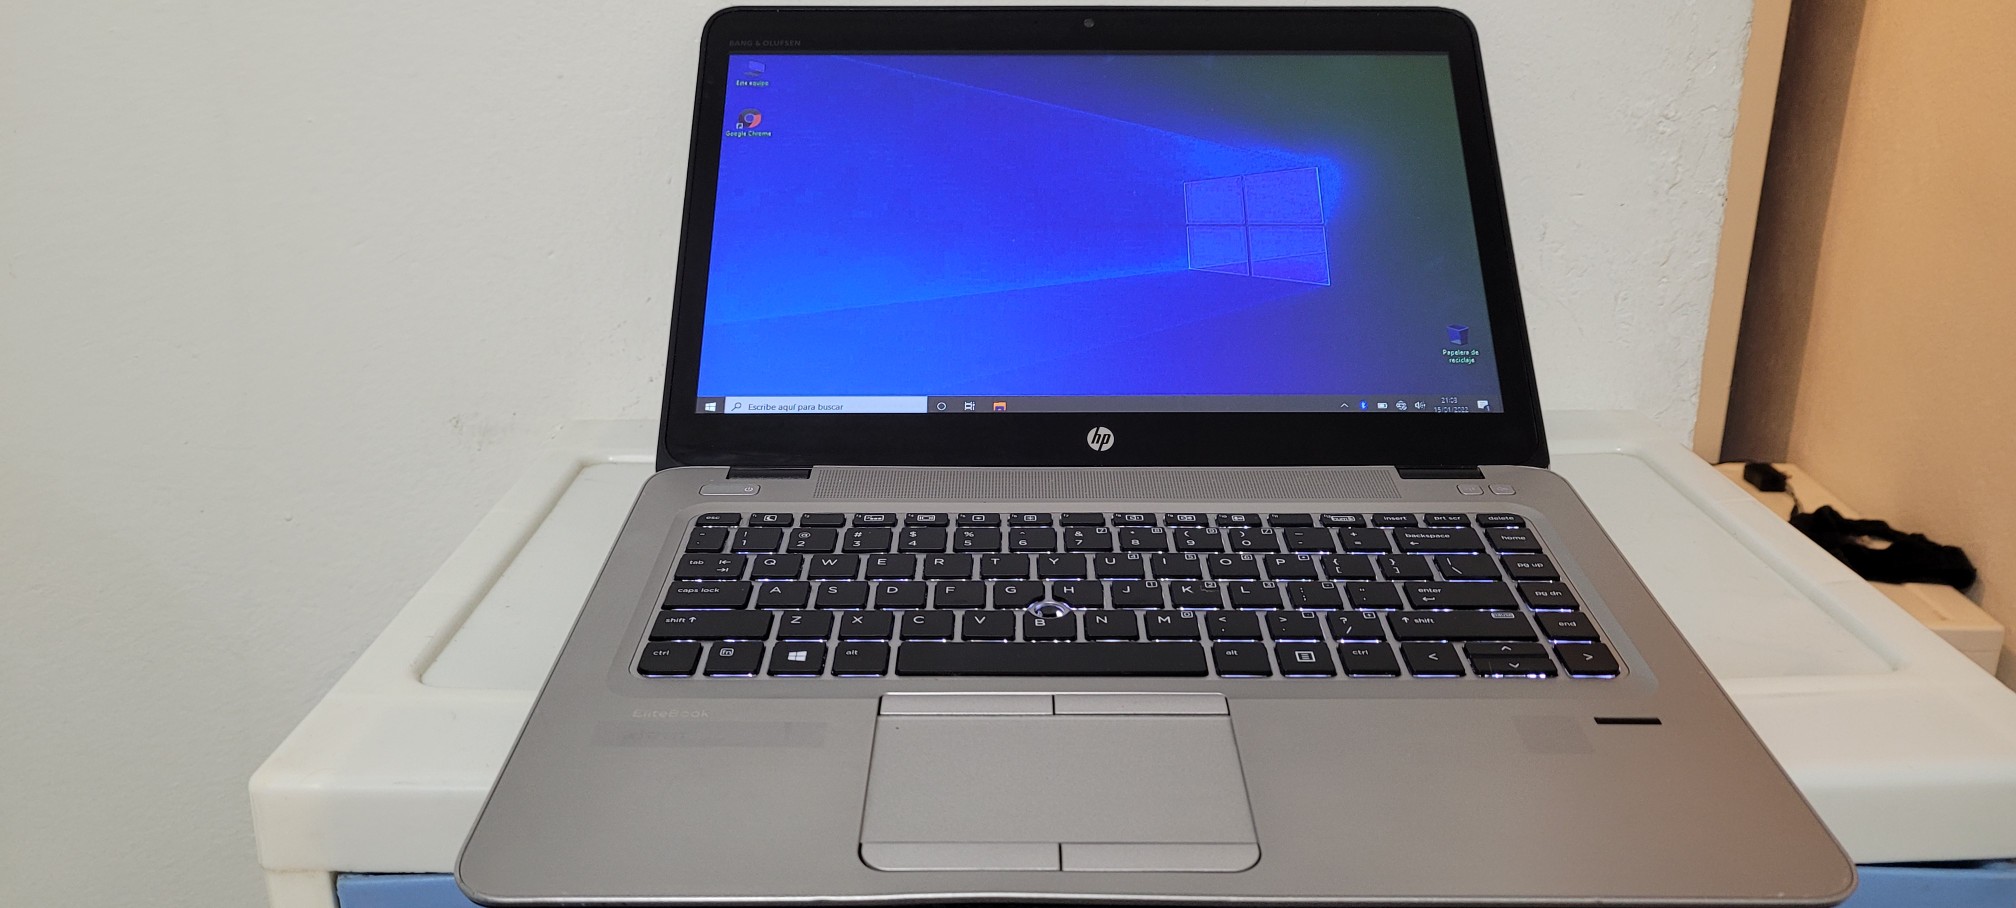 computadoras y laptops - Laptop hp EliteBooK 14 Pulg Core i5 7ma Gen Ram 8gb ddr4 SSD 500GB FULL 0